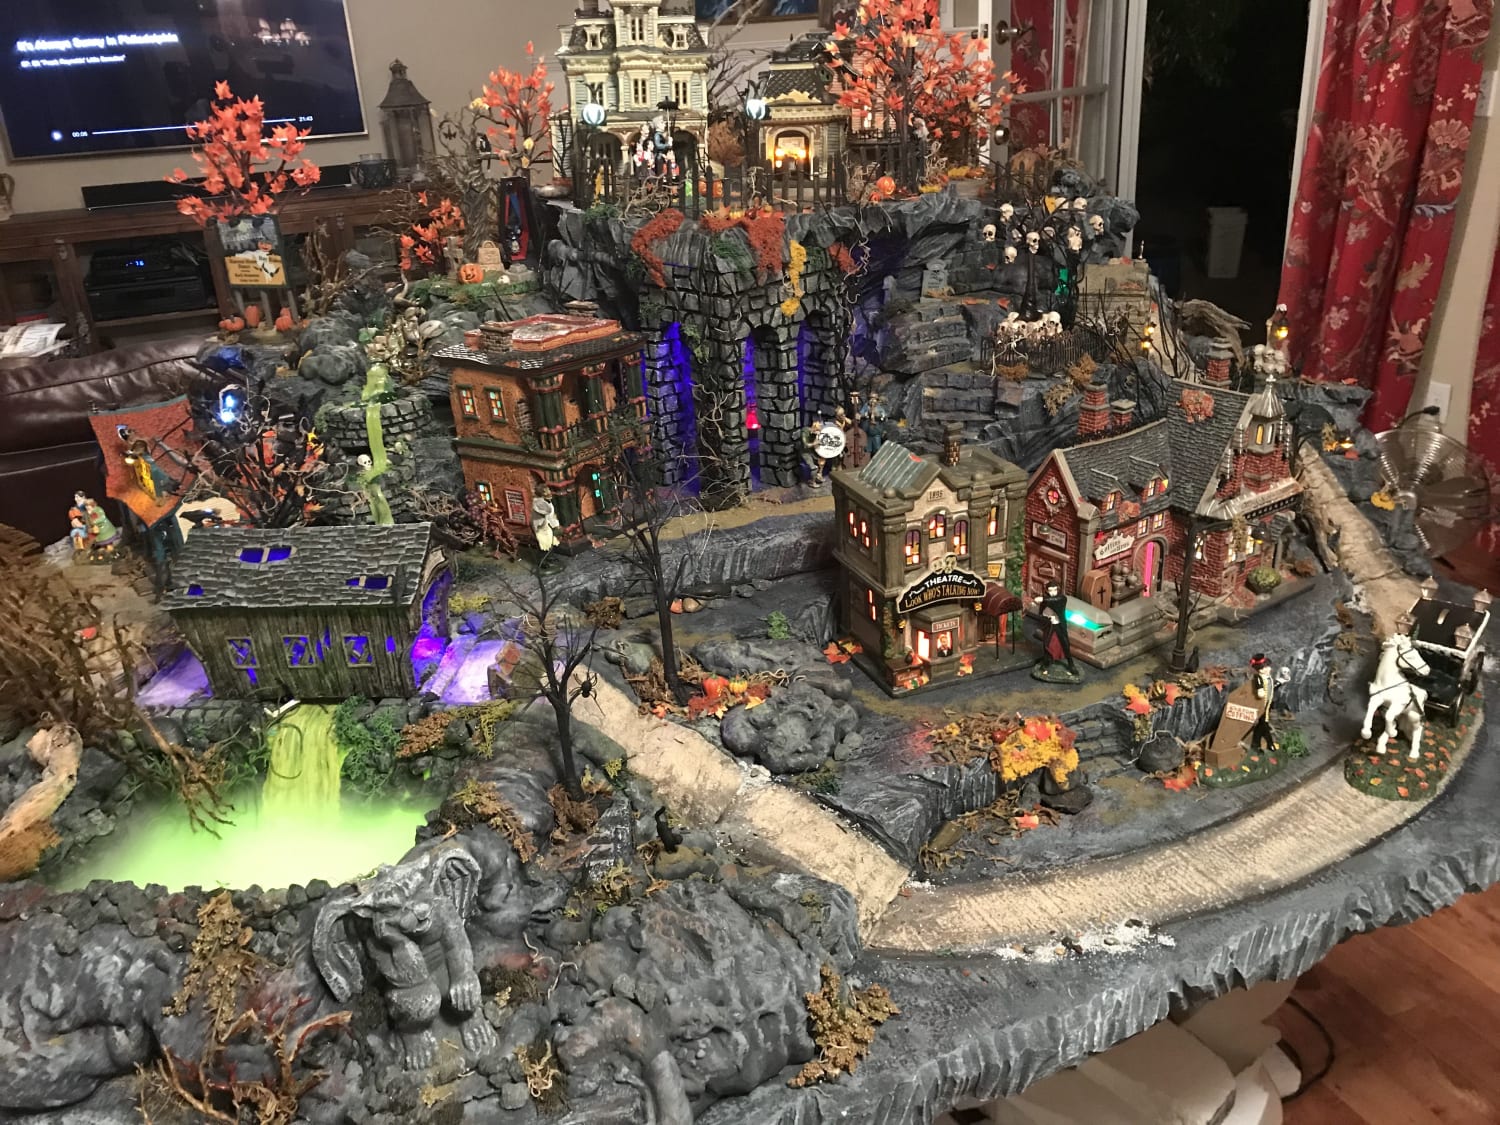 2017 Halloween Village Display by Christi | Halloween village display, Halloween village, Spooky town village